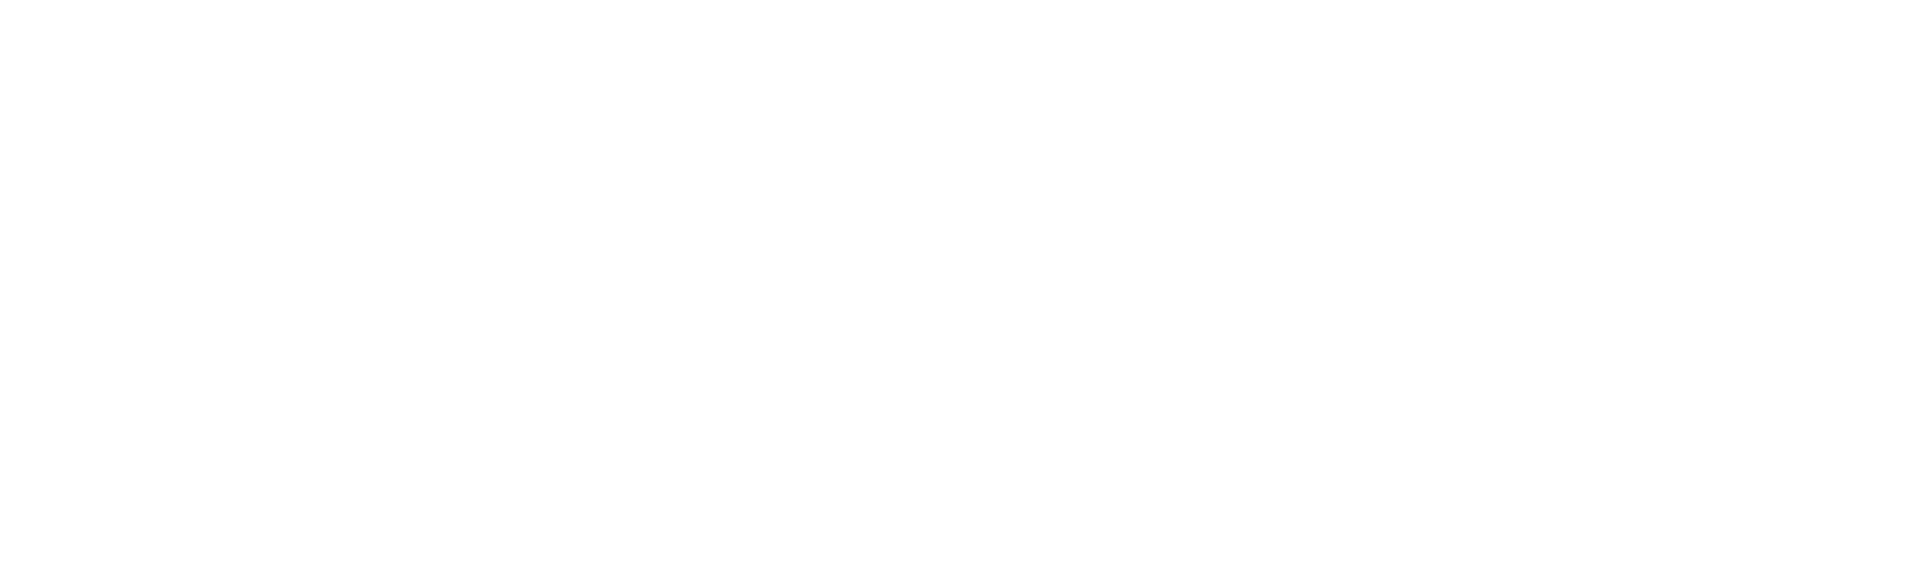 climabox climazone